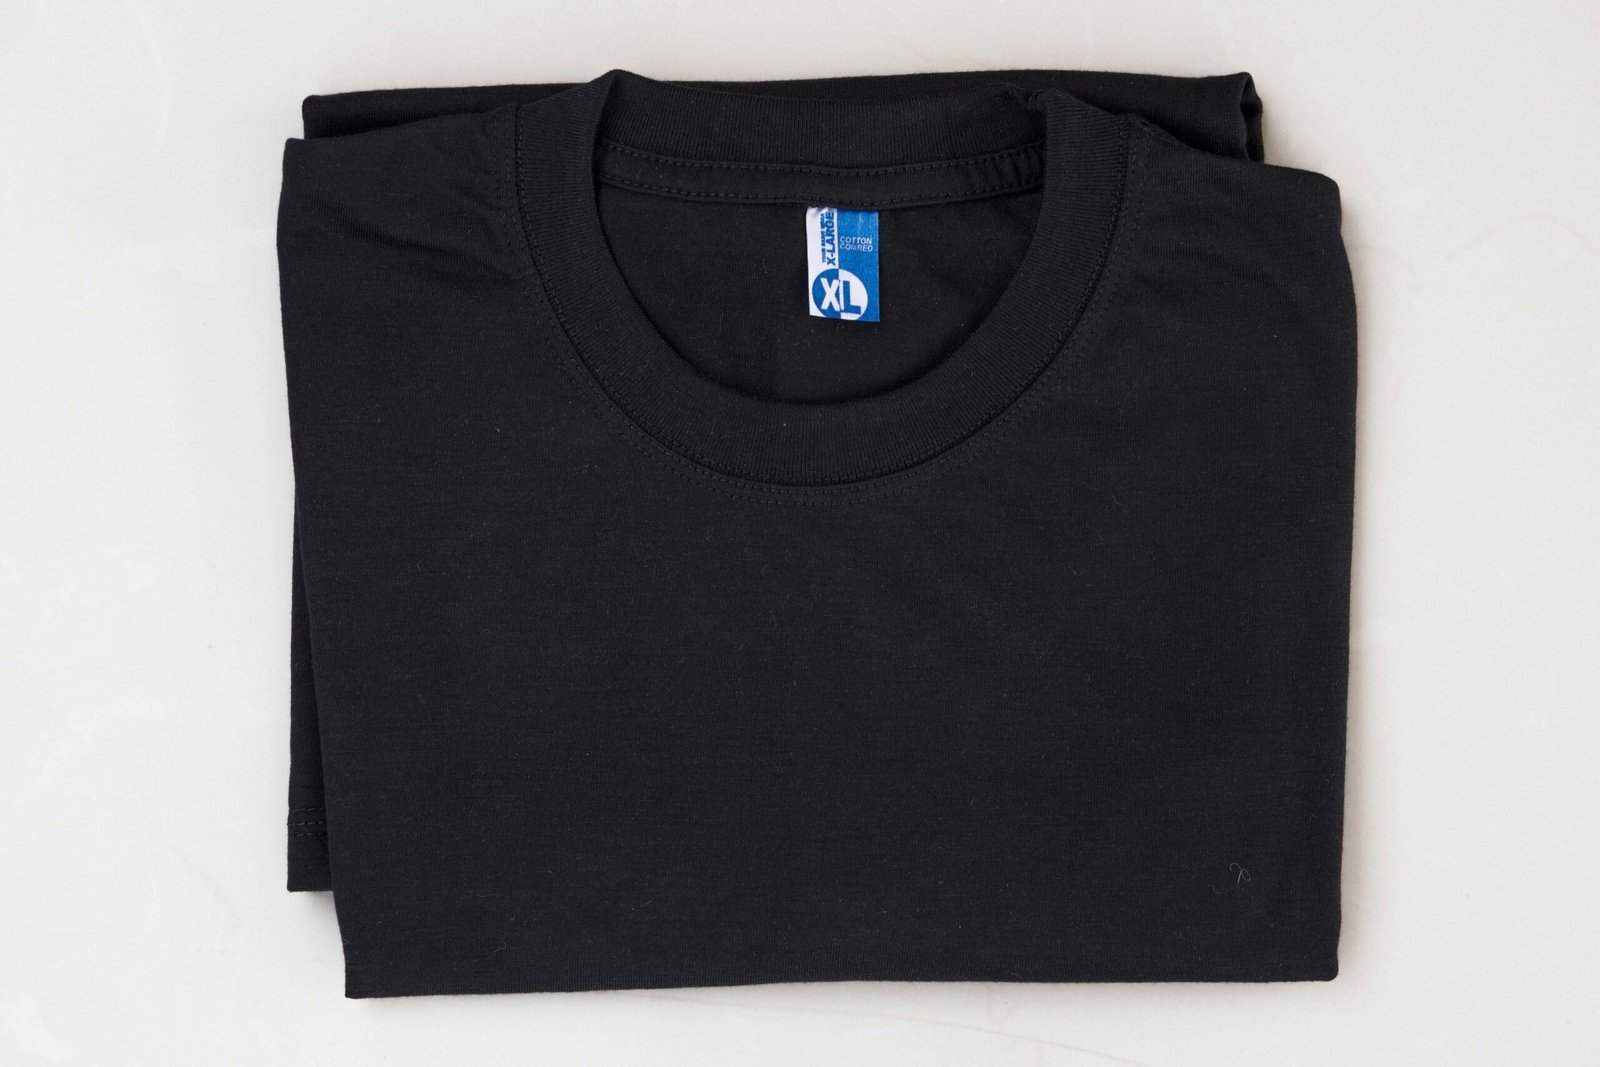 a black shirt with a logo